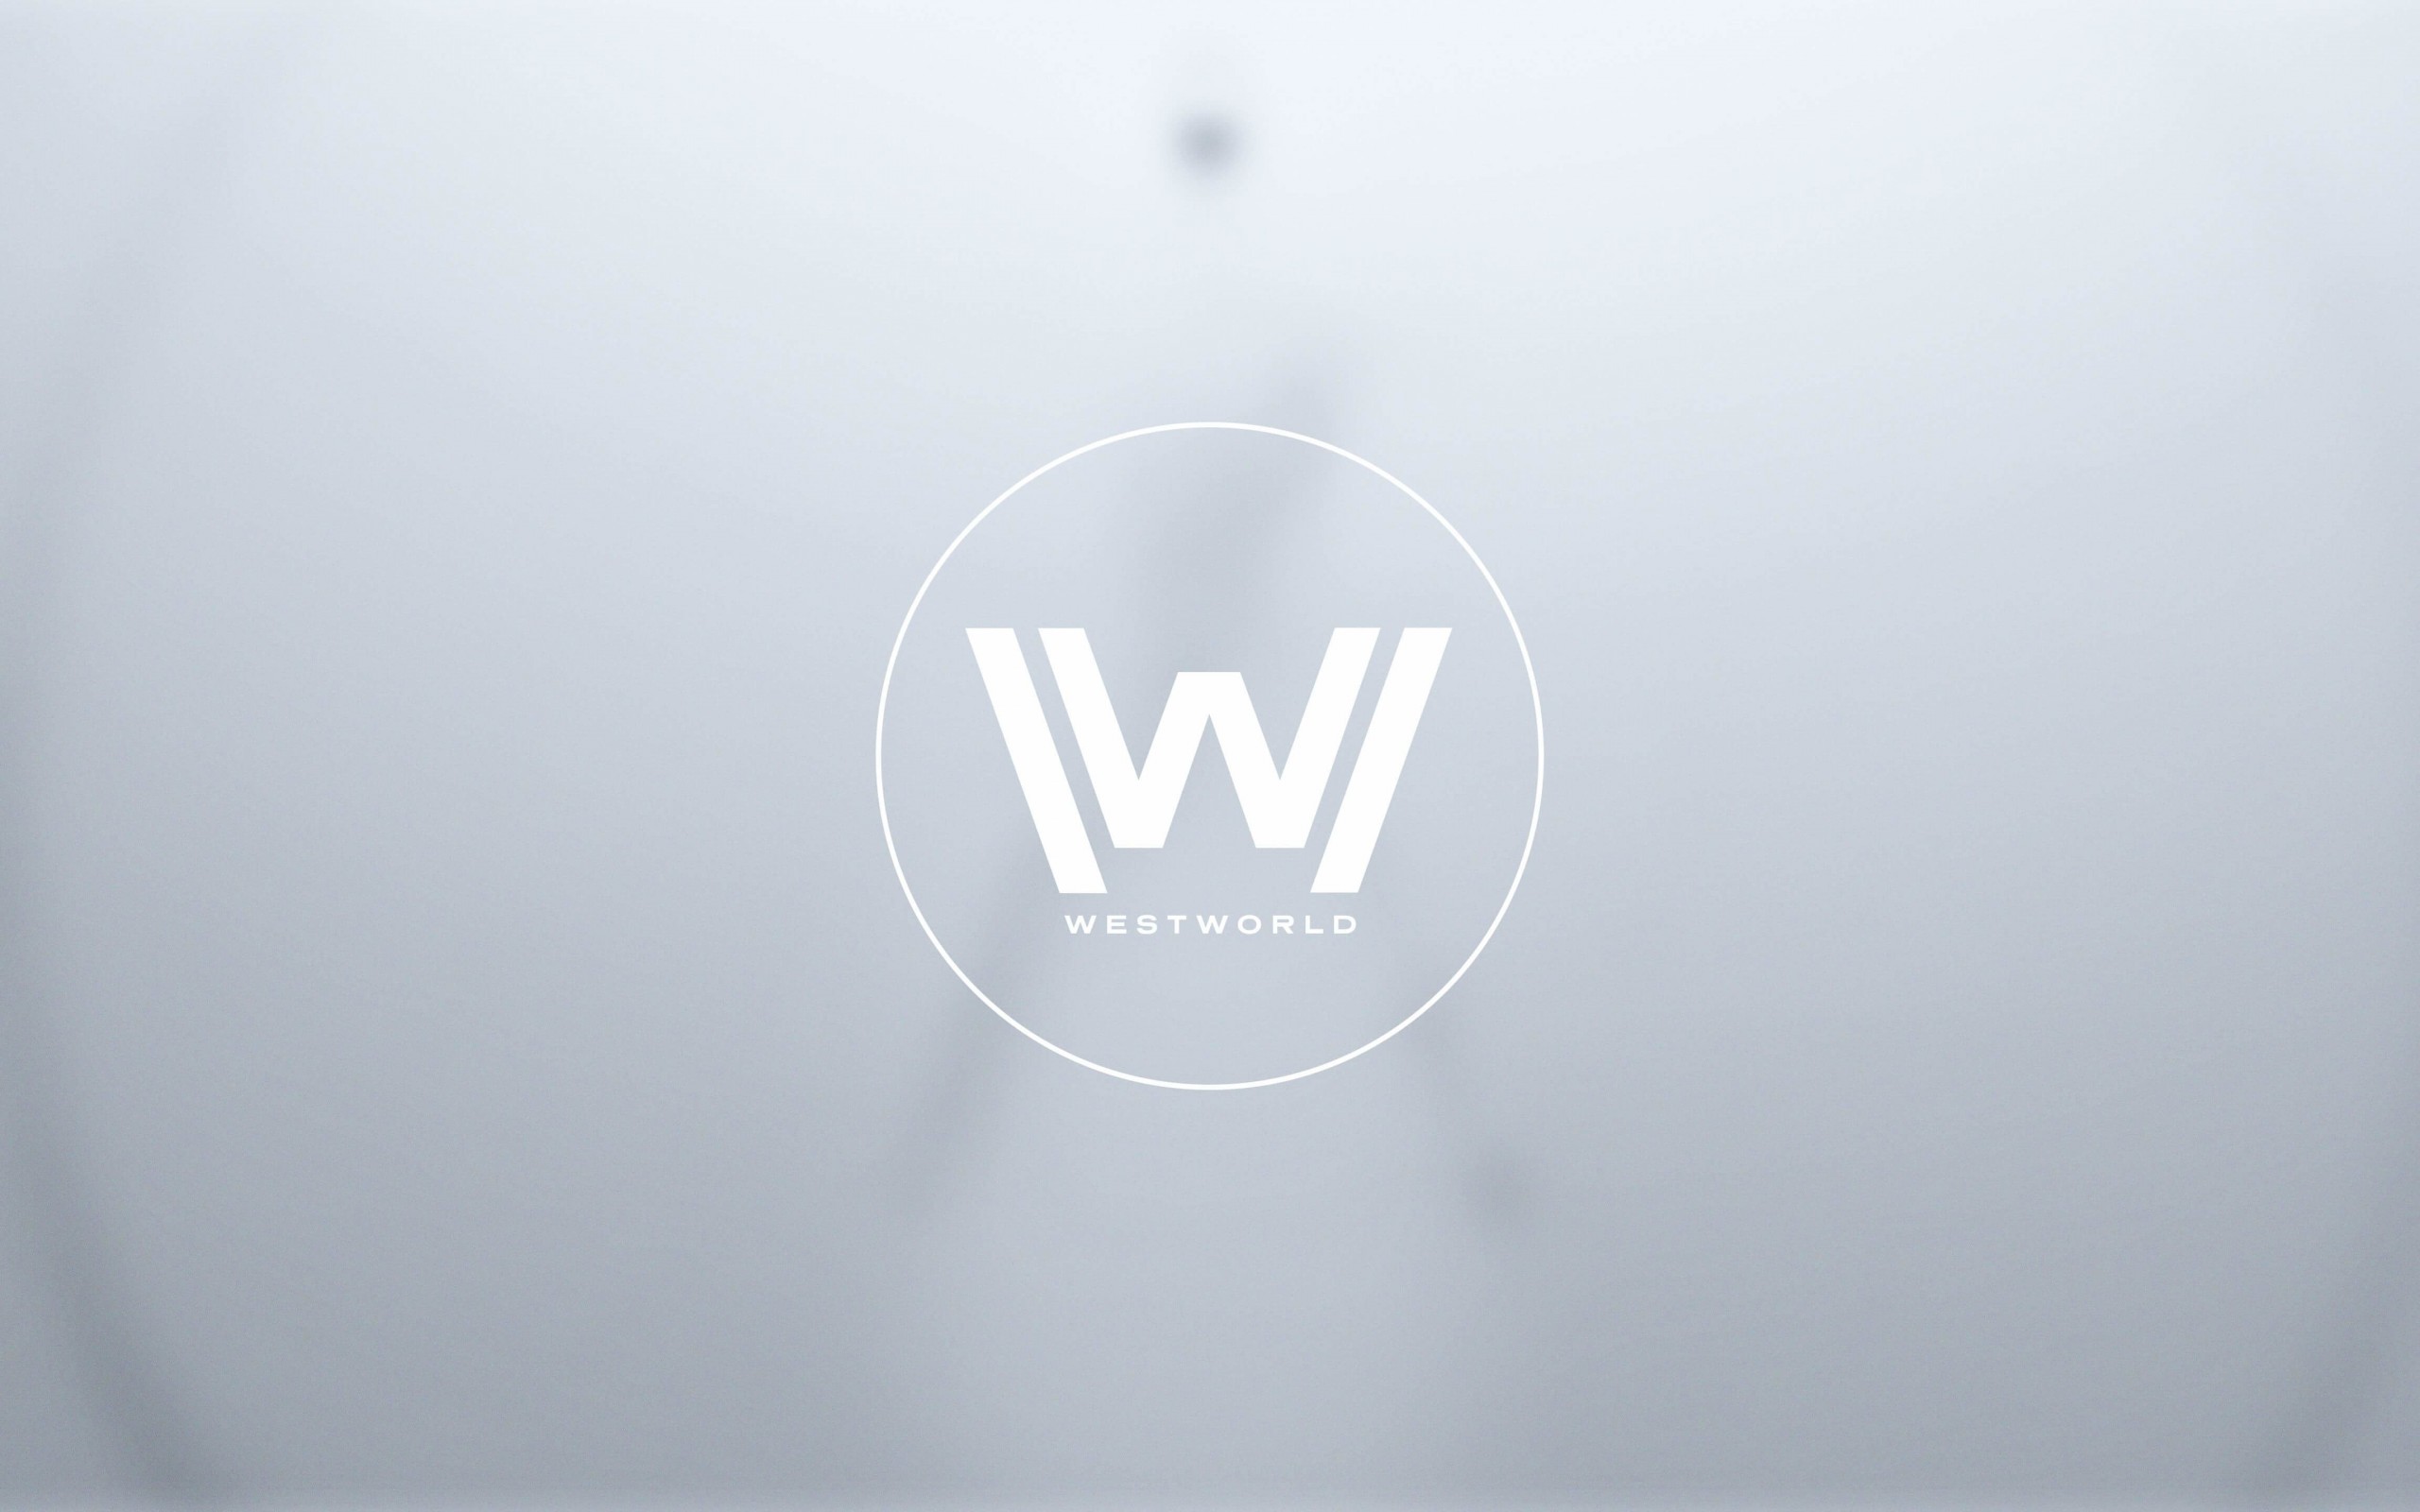 Westworld Logo Wallpaper for Desktop 2560x1600